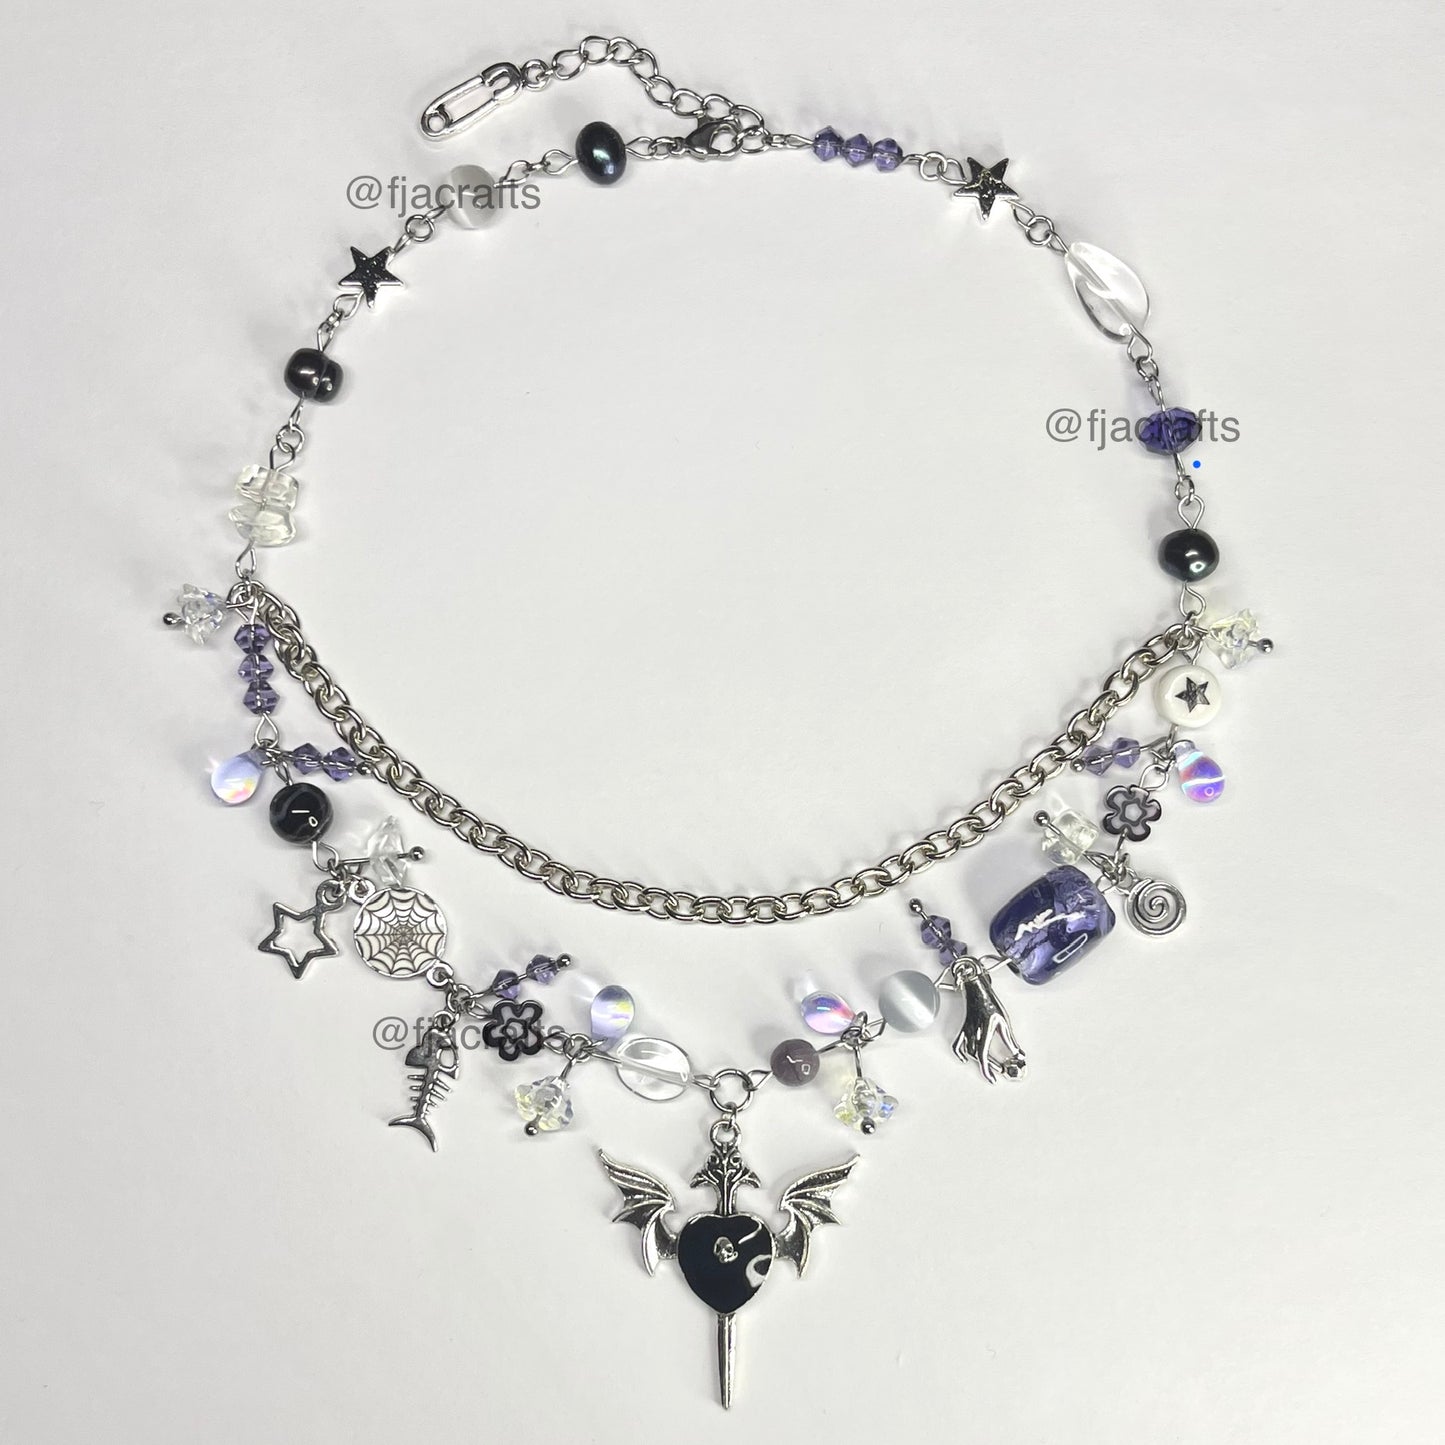 Villain Era Clutter Necklace | jiggly, spider, web, sword, fish, stars, hand | purple, black, clear, silver FJA Crafts